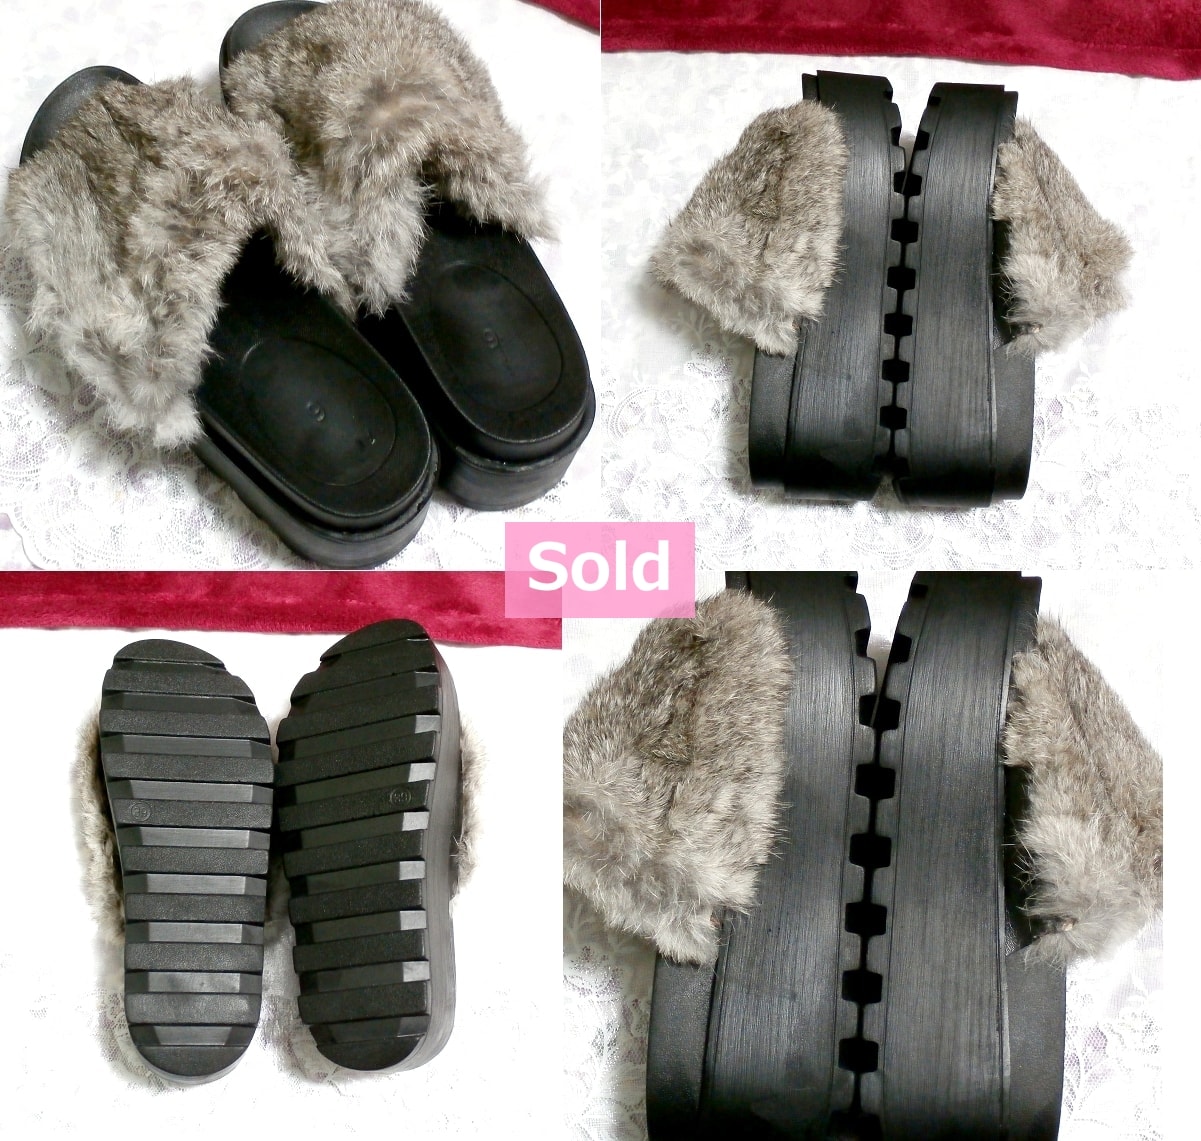 Graue Pelz Damenschuhe / Sandalen mit dickem Boden, auch für Damenschuhe / Sandalen mit grauem Fell und dickem Boden